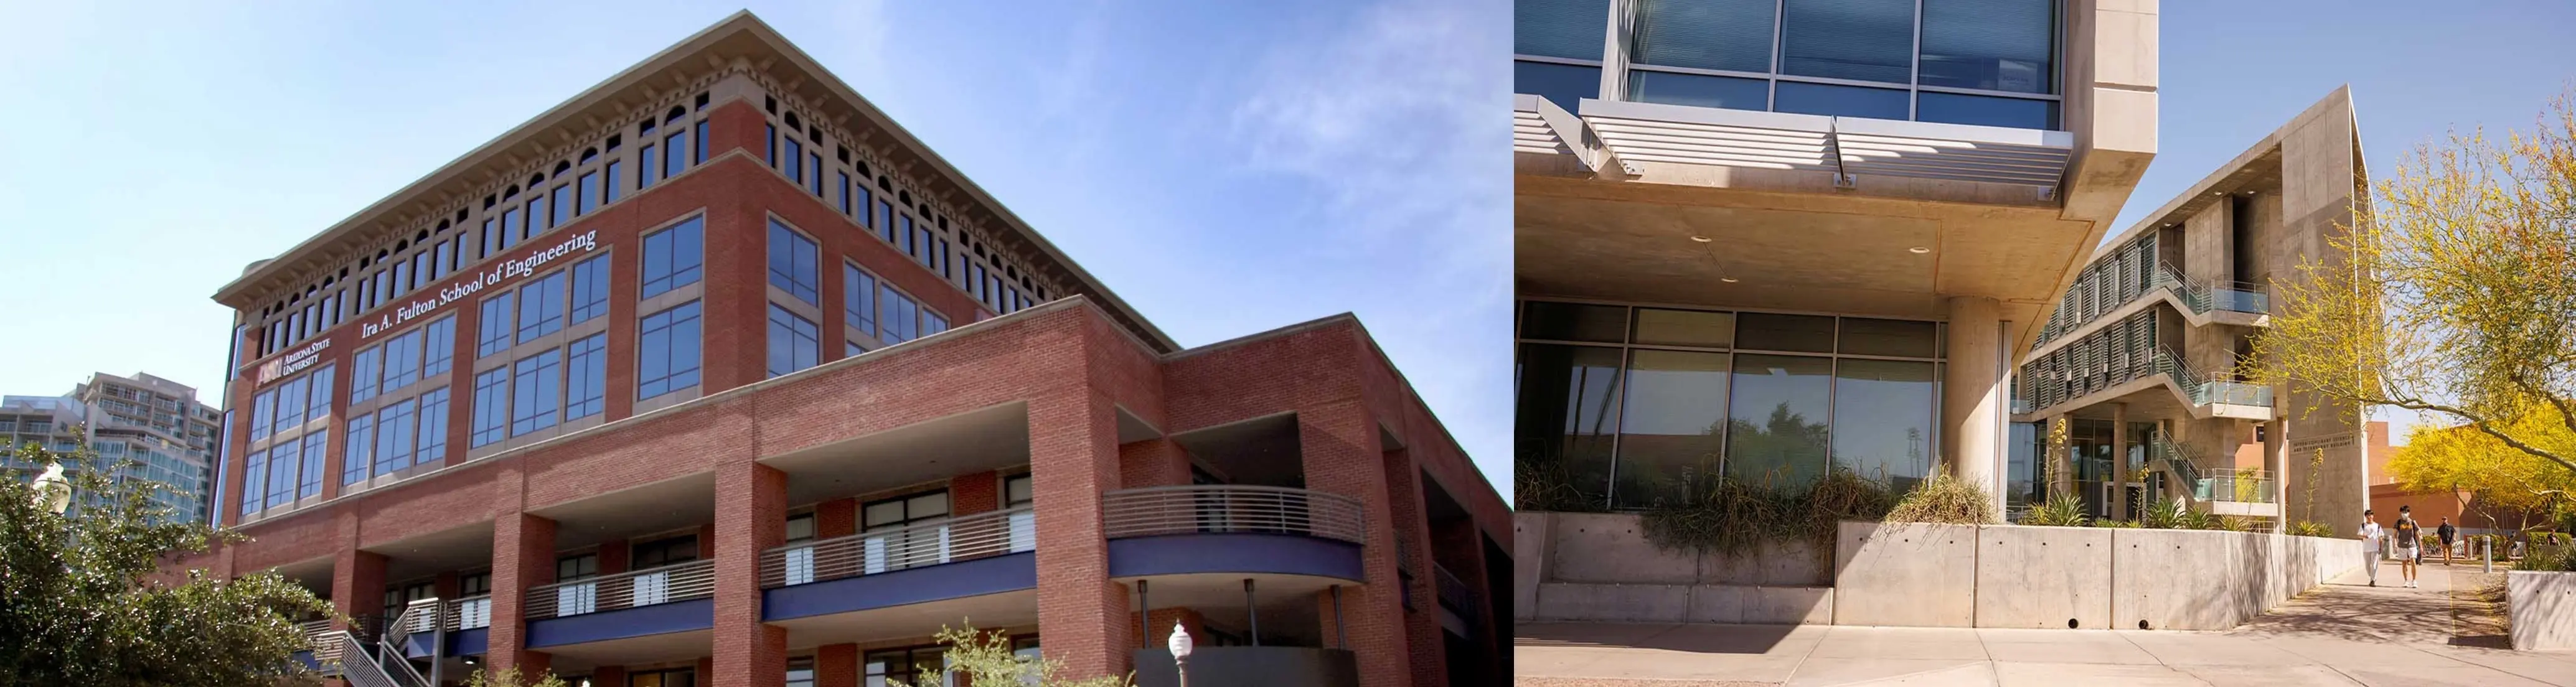 Image showing Brickyard Engineering building and ISTB1 building from ASU's Tempe campus. Photos via Arizona State University.